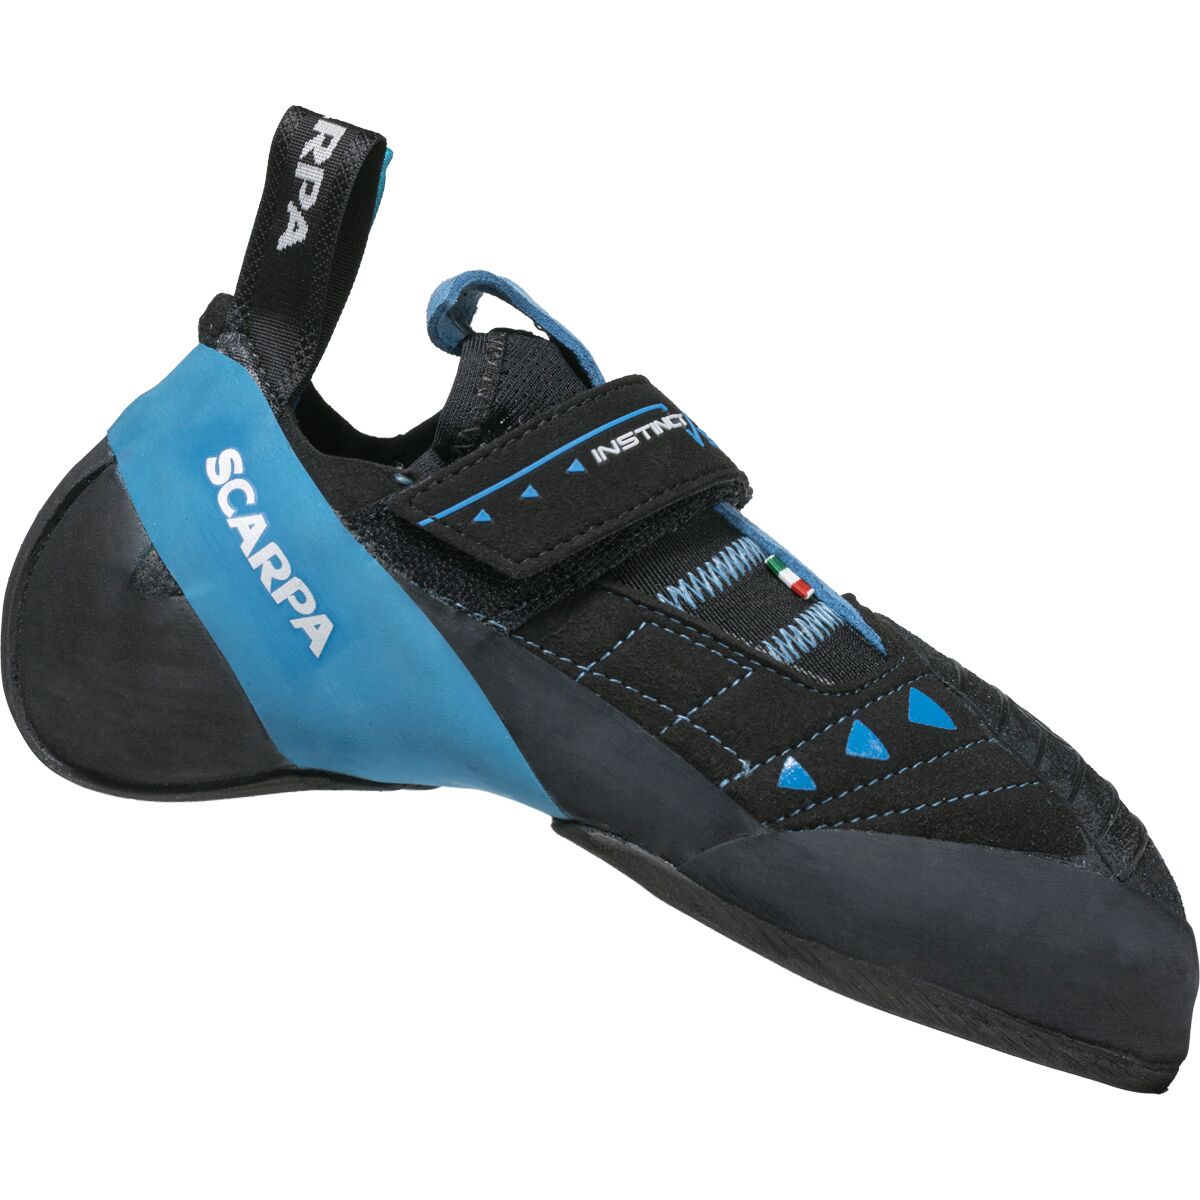 Item 766743 - Scarpa Instinct VSR - Climbing Shoes - Size 39 1